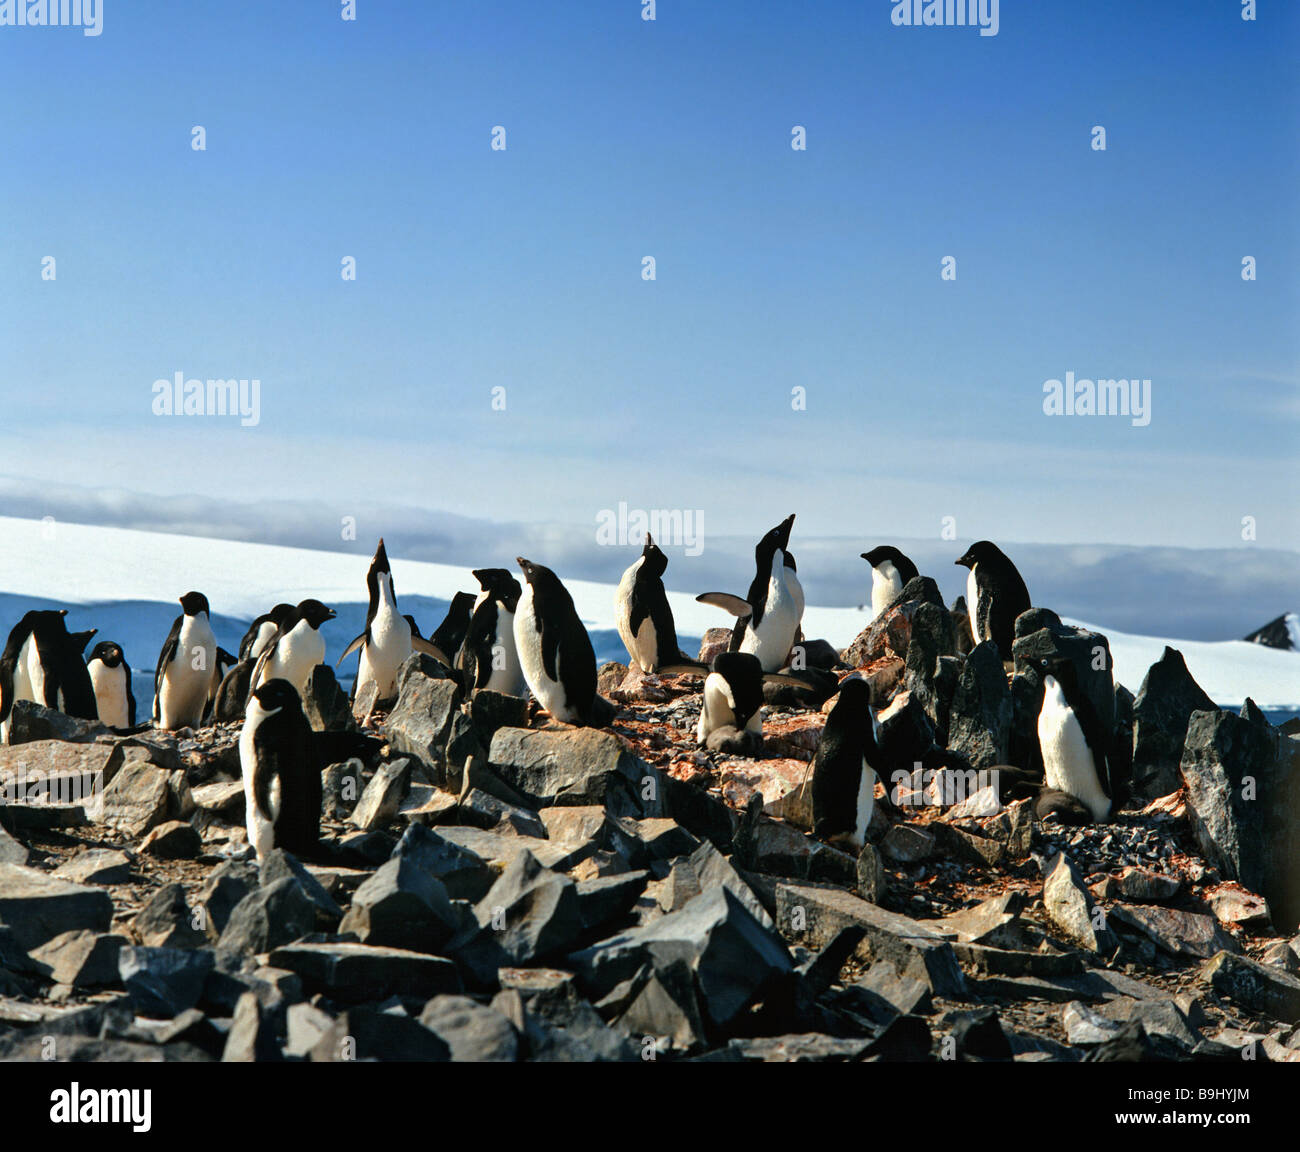 Los pingüinos Adelia (Pygoscelis adeliae), colonia de pingüinos antárticos, Foto de stock